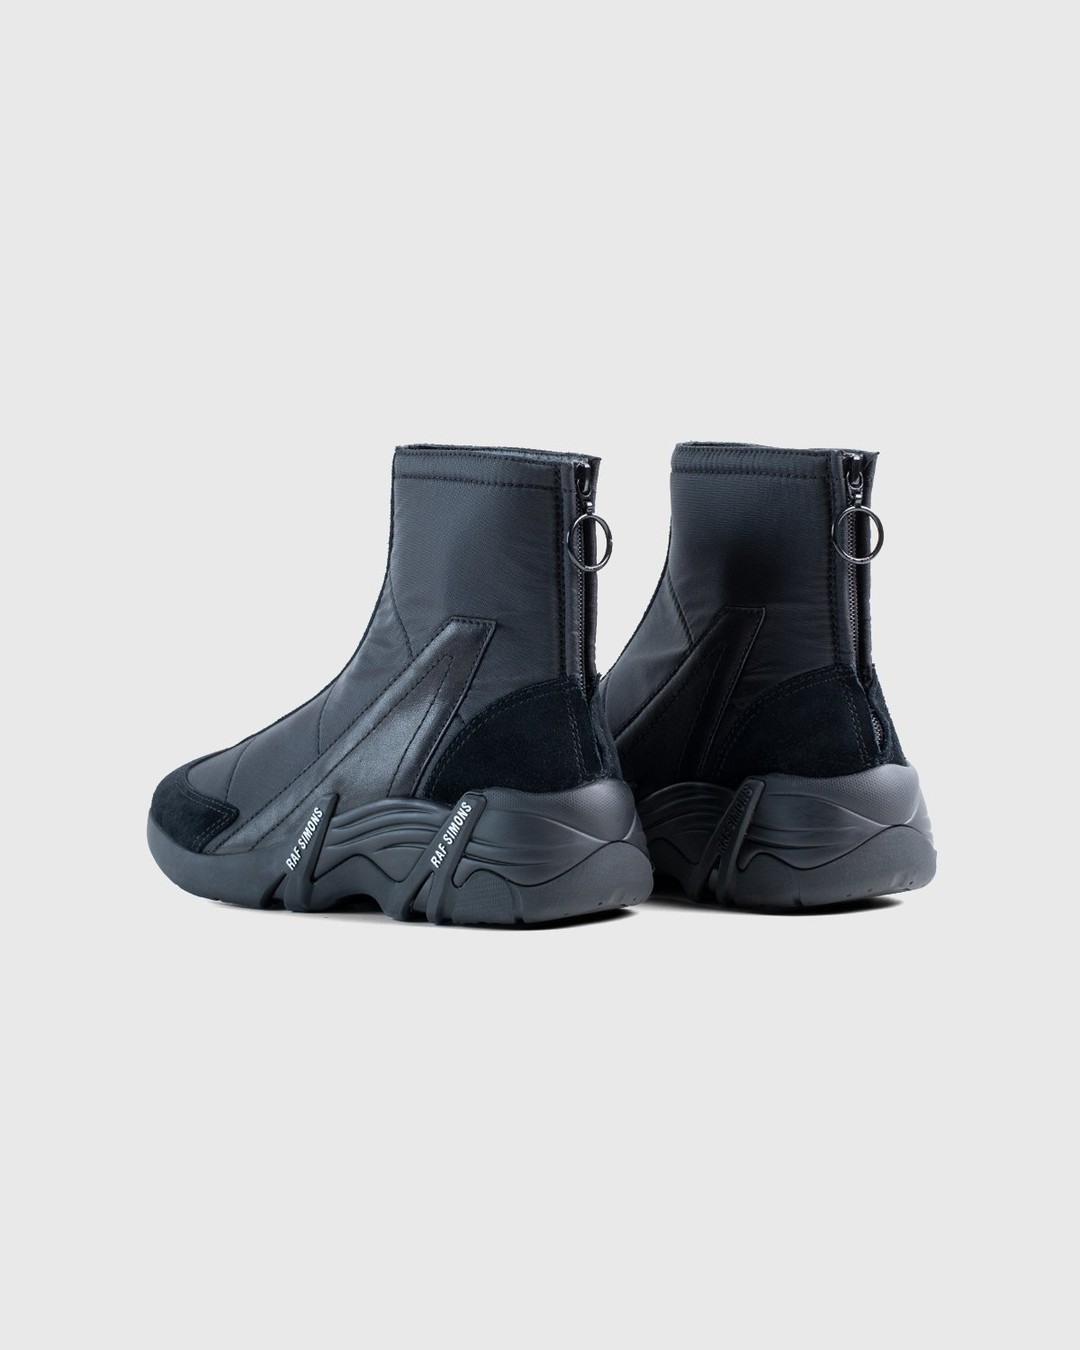 Raf Simons – Cylon 22 Black - High Top Sneakers - Black - Image 3